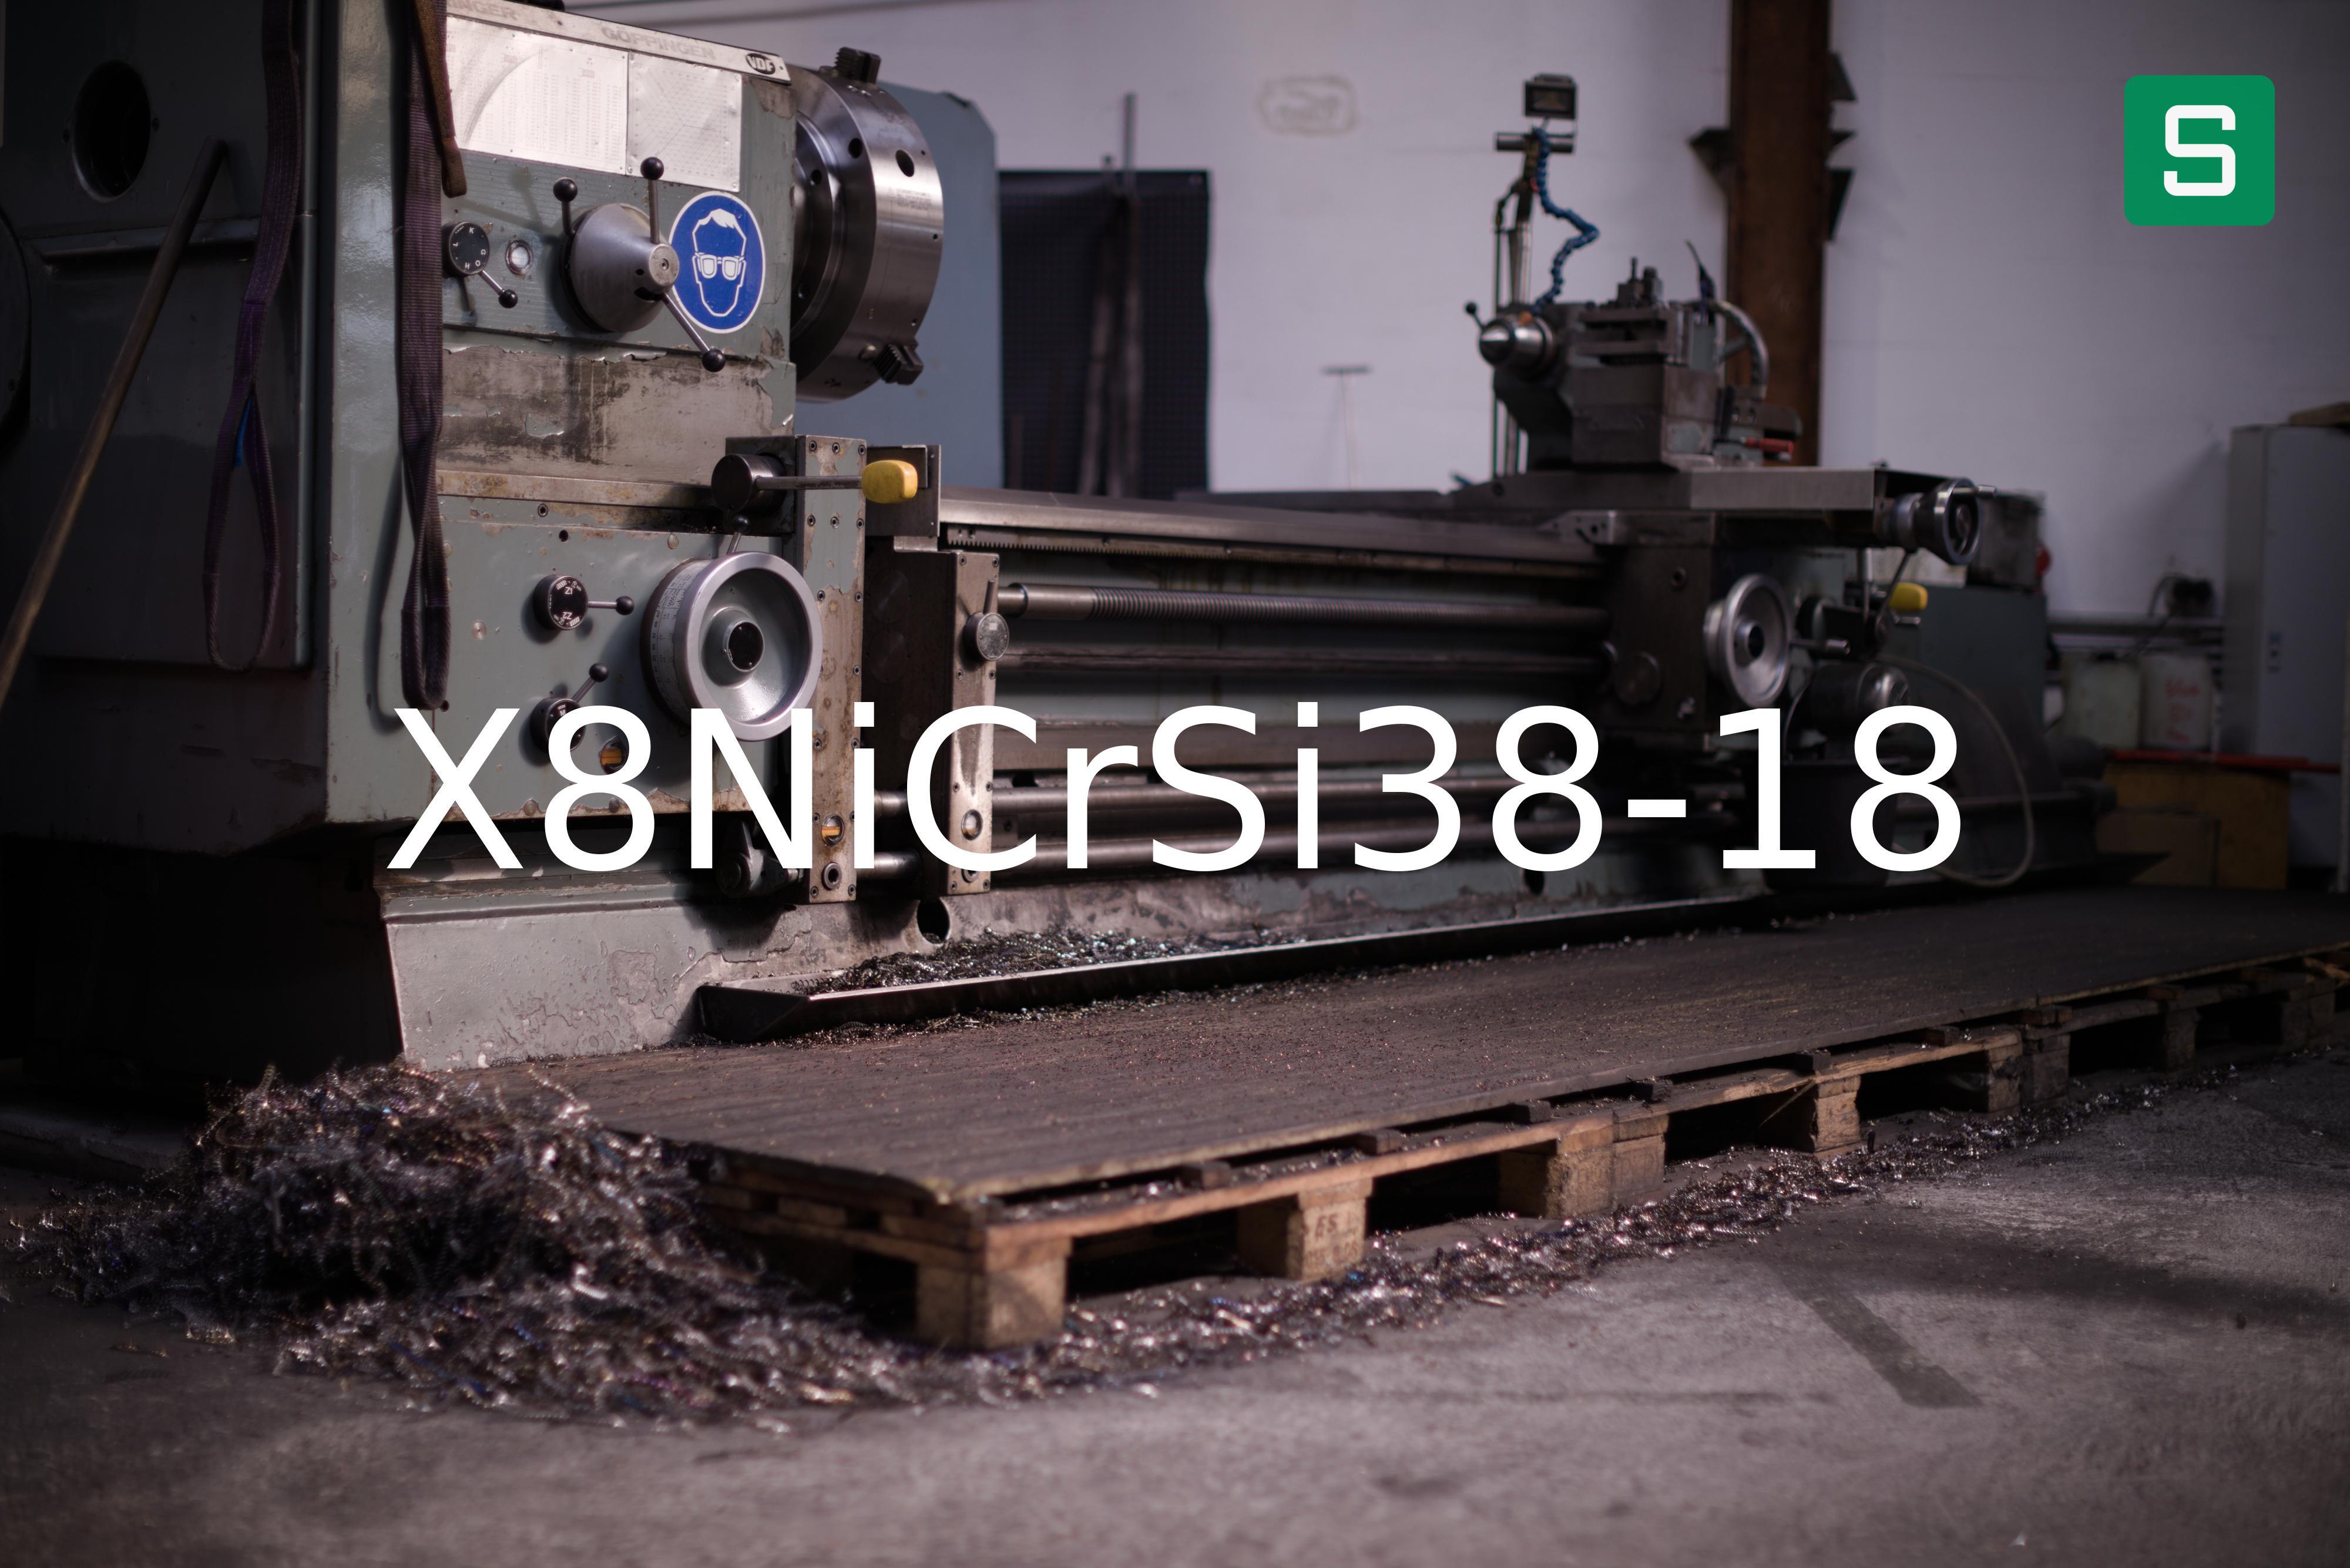 Steel Material: X8NiCrSi38-18